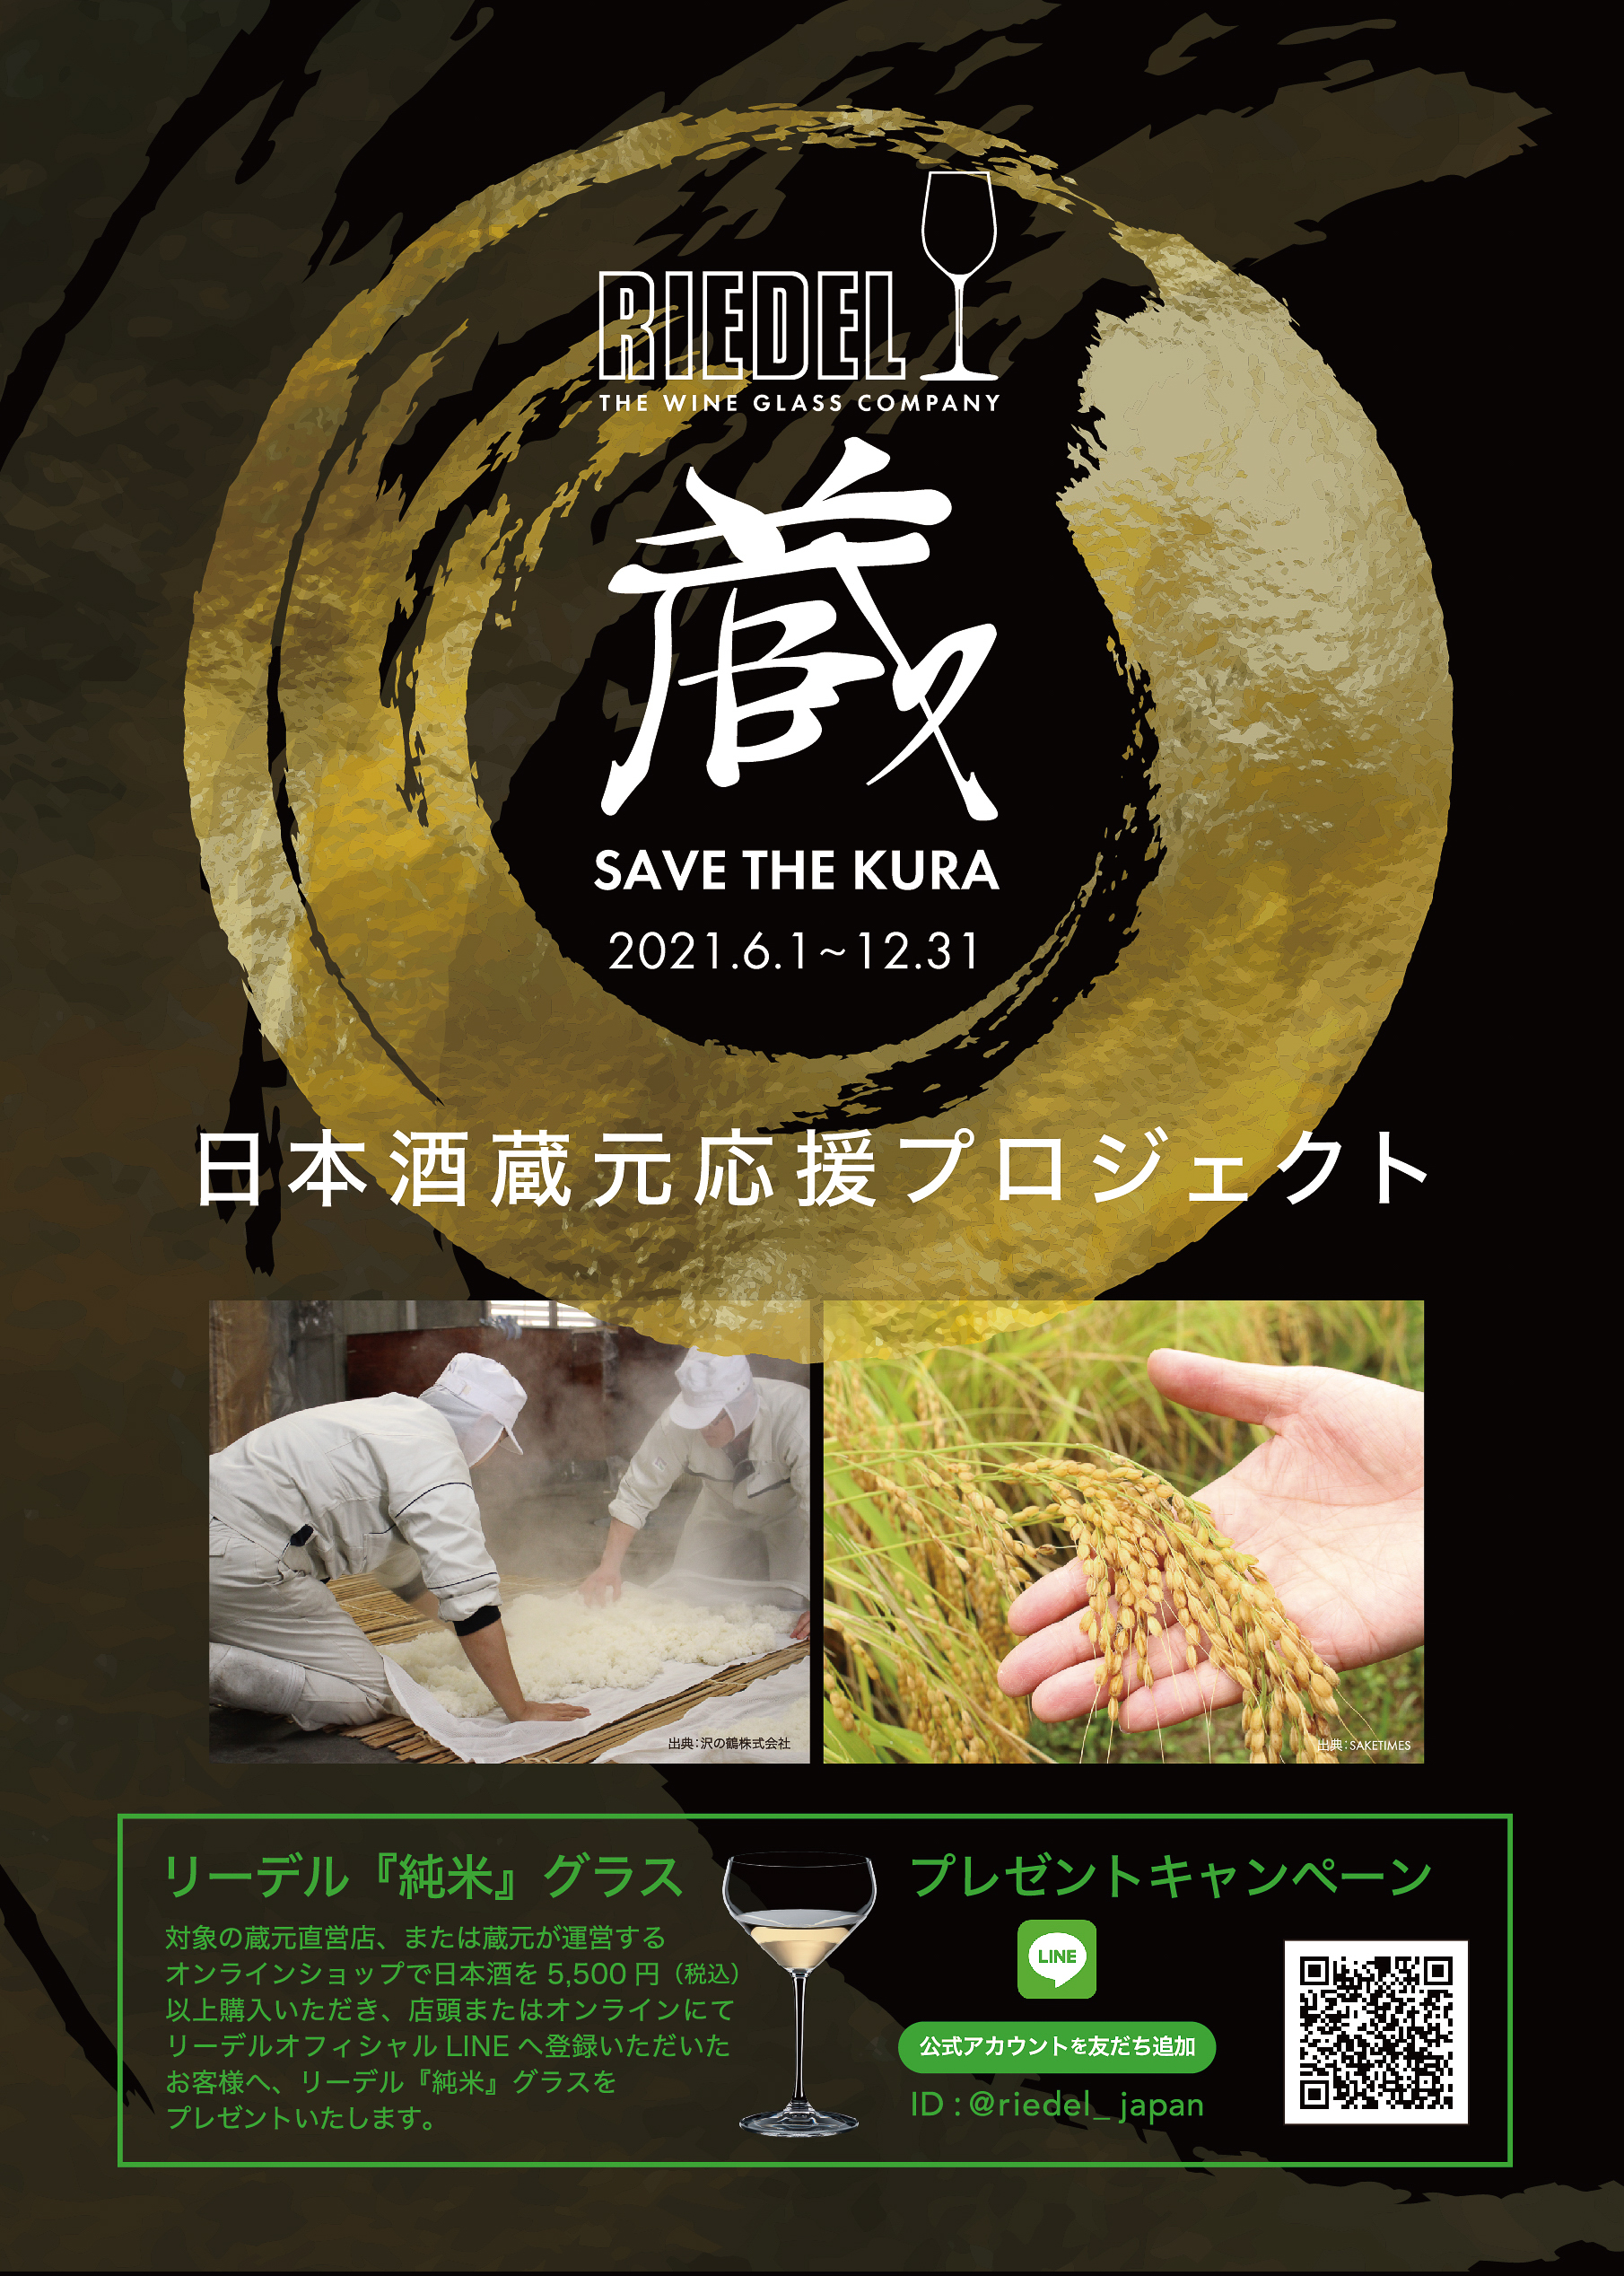 “SAVE THE KURA” 日本酒蔵元応援プロジェクト